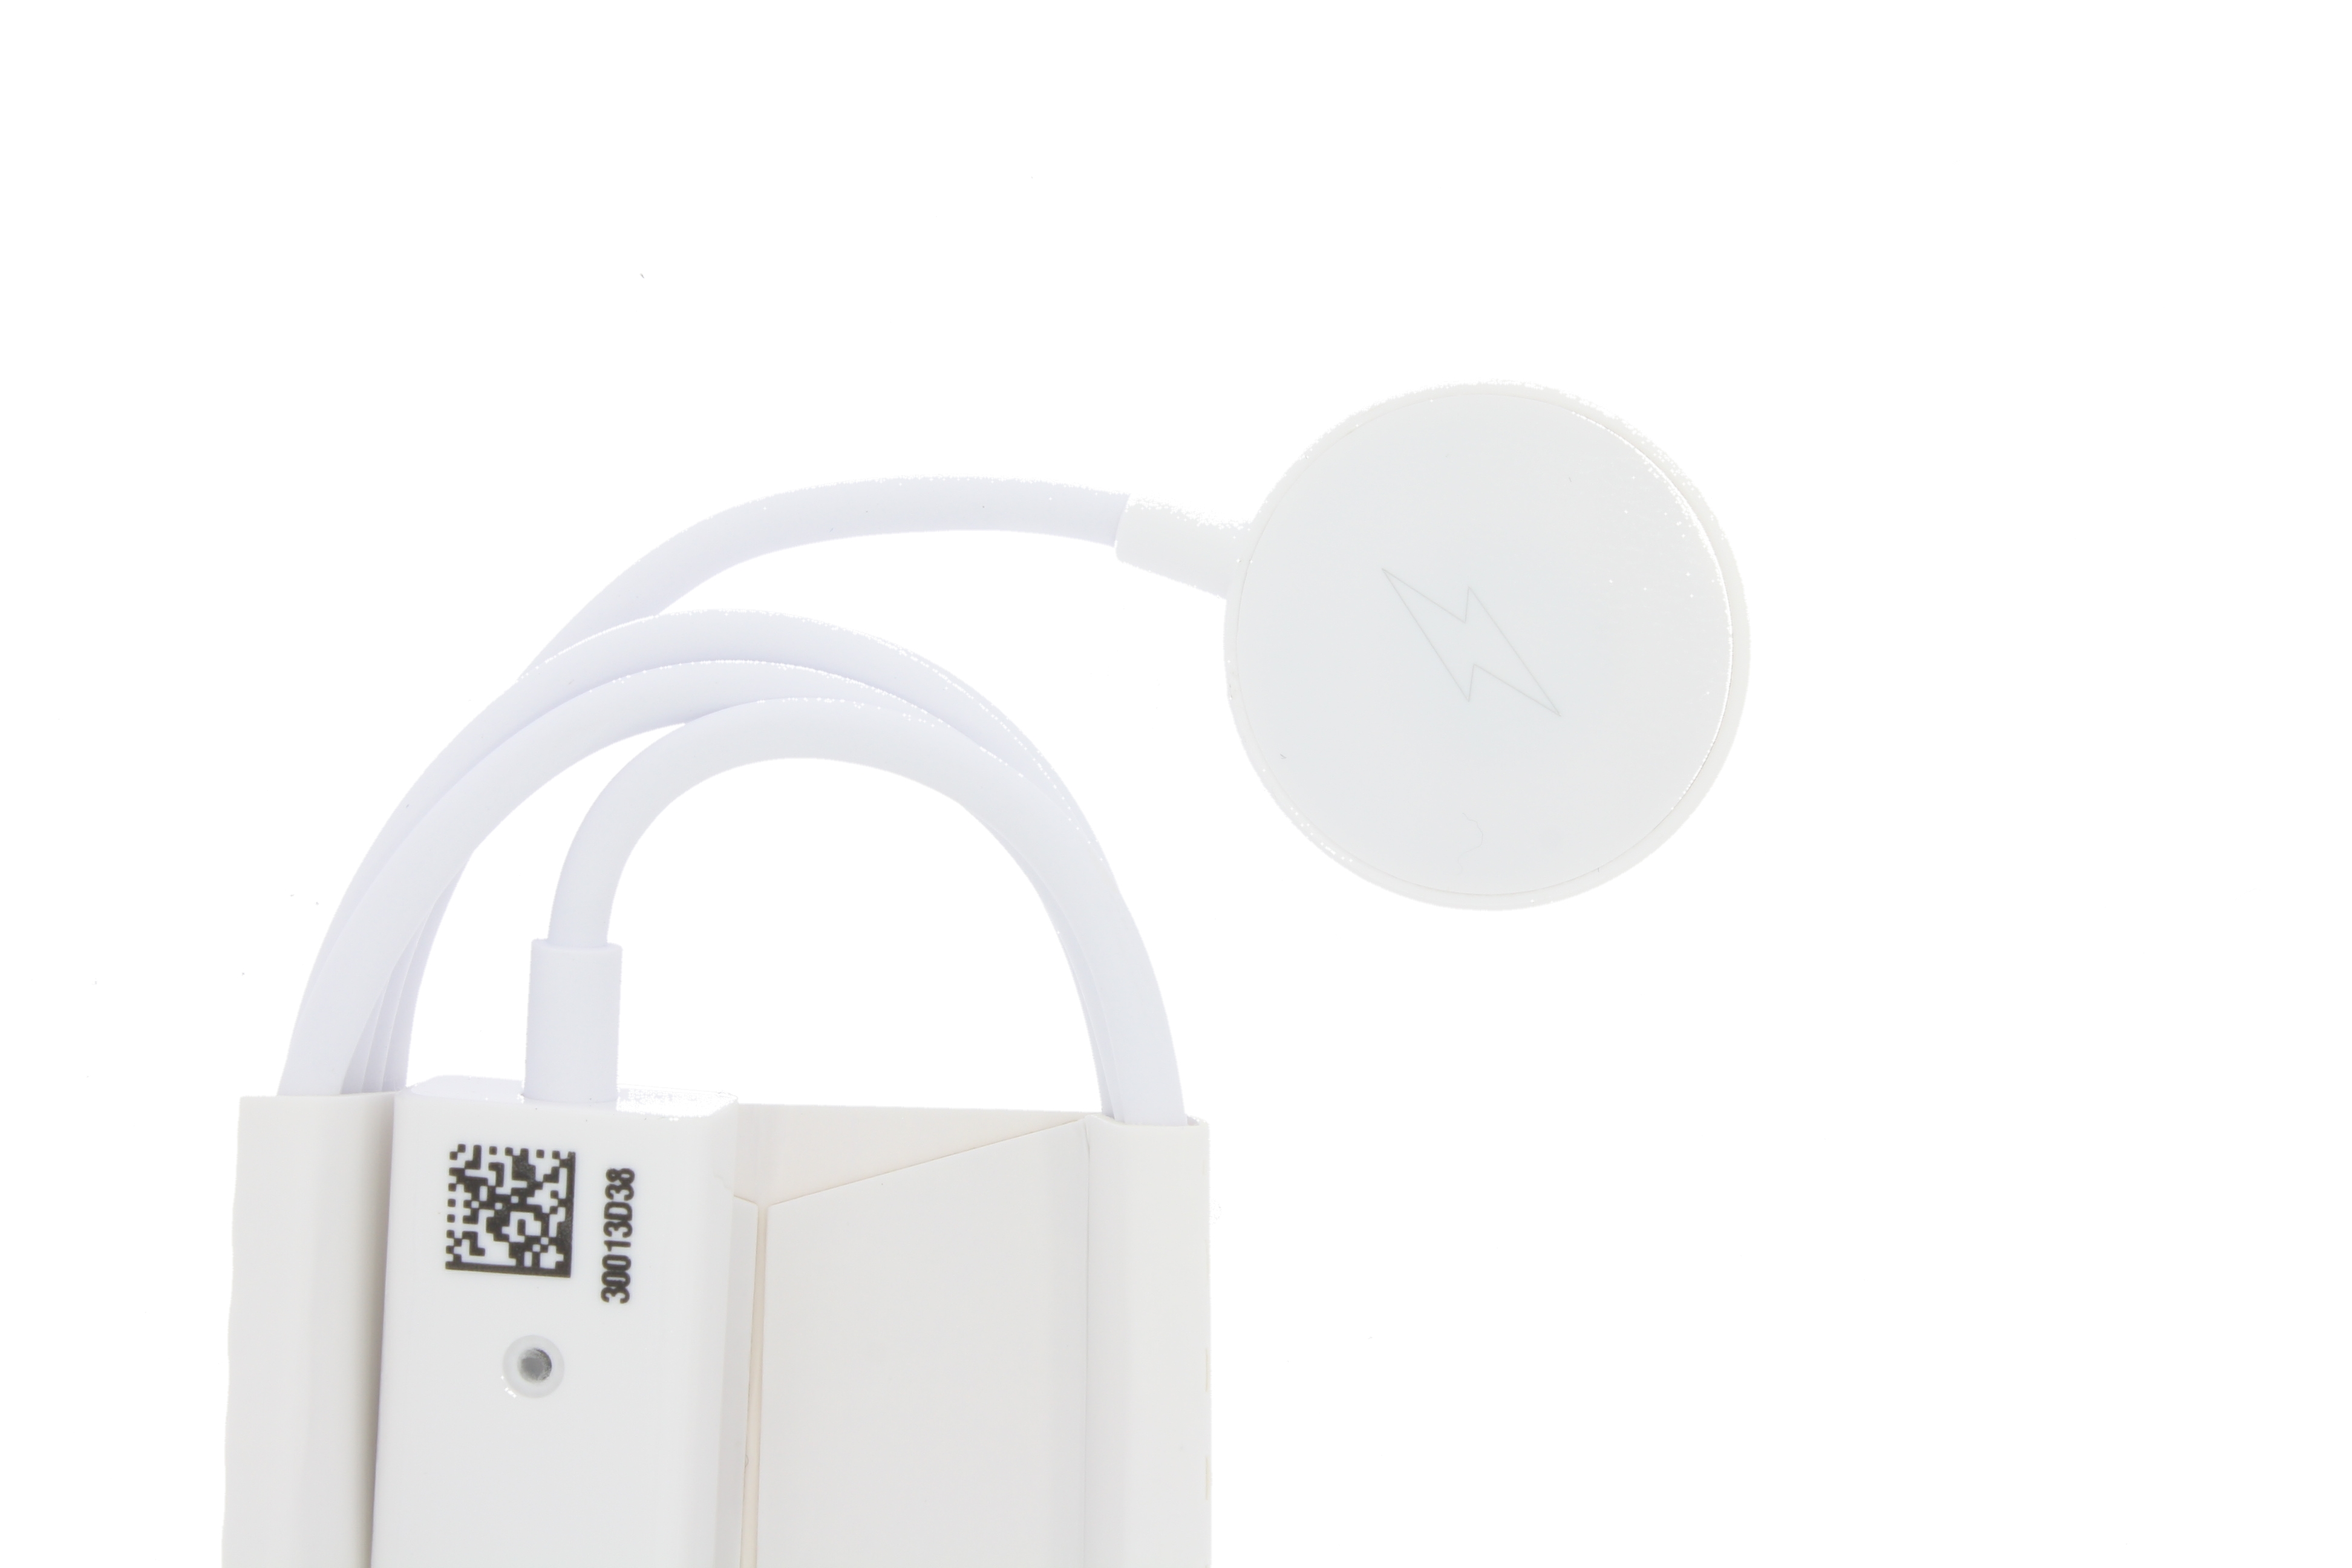 Michael Kors Smartwatch USB Charging Cable MKT5020 / MKT5012 - Generation 3